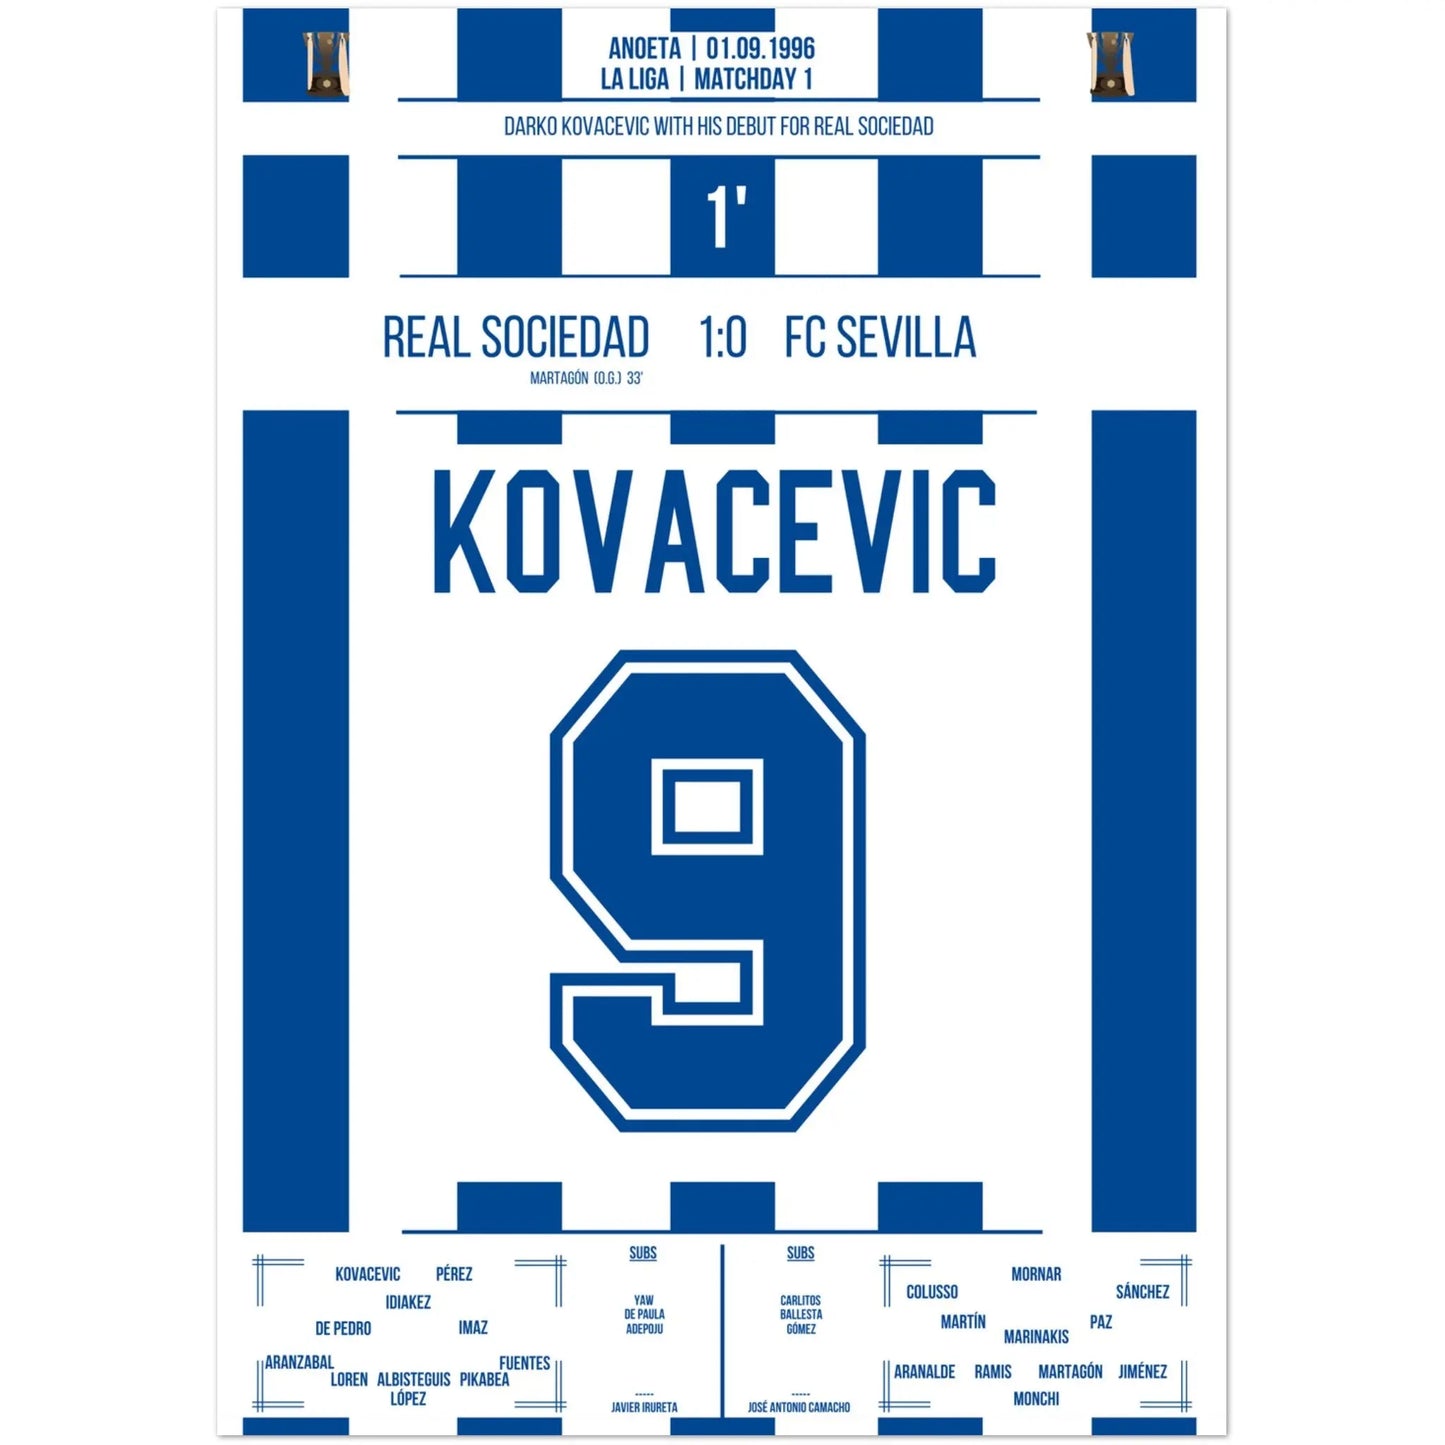 Debüt von Darko Kovacevic für Real Sociedad in 1996